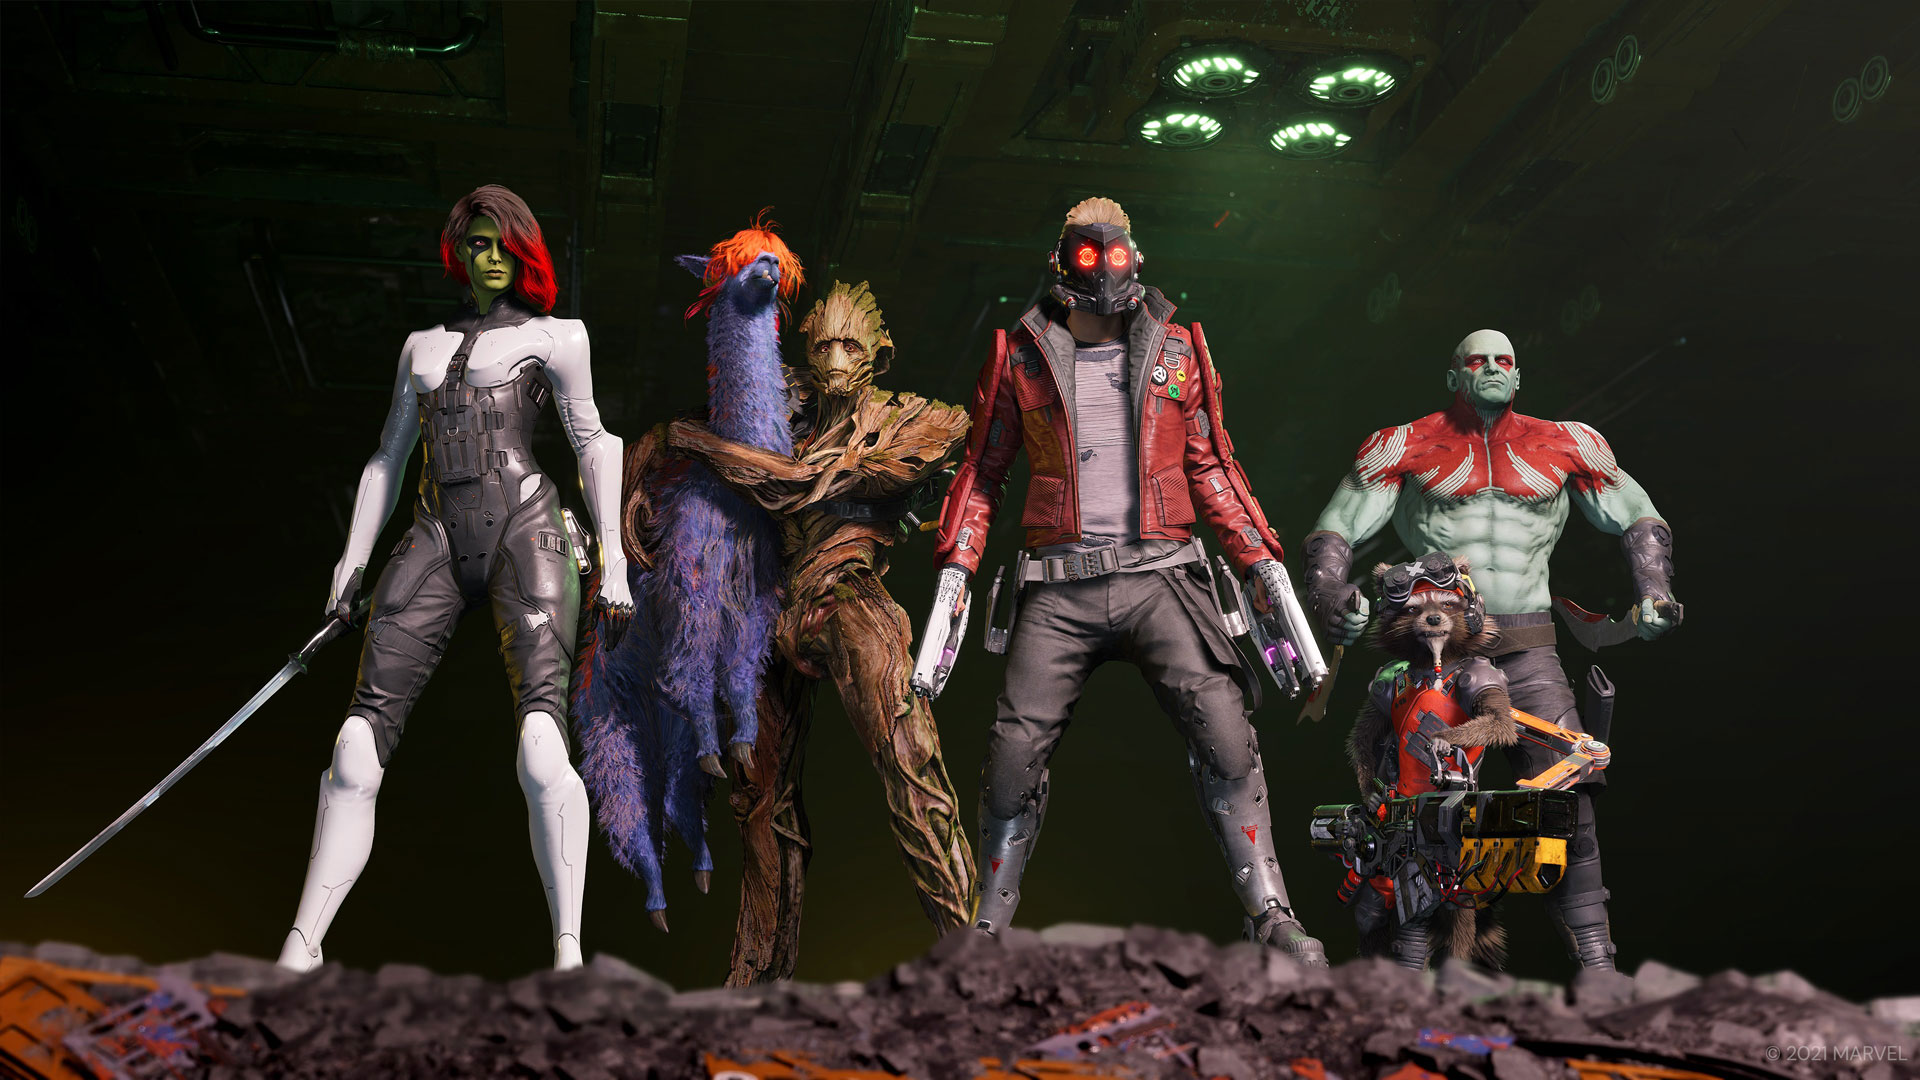 Jogo Marvel's Guardians of the Galaxy para Xbox Series S / X